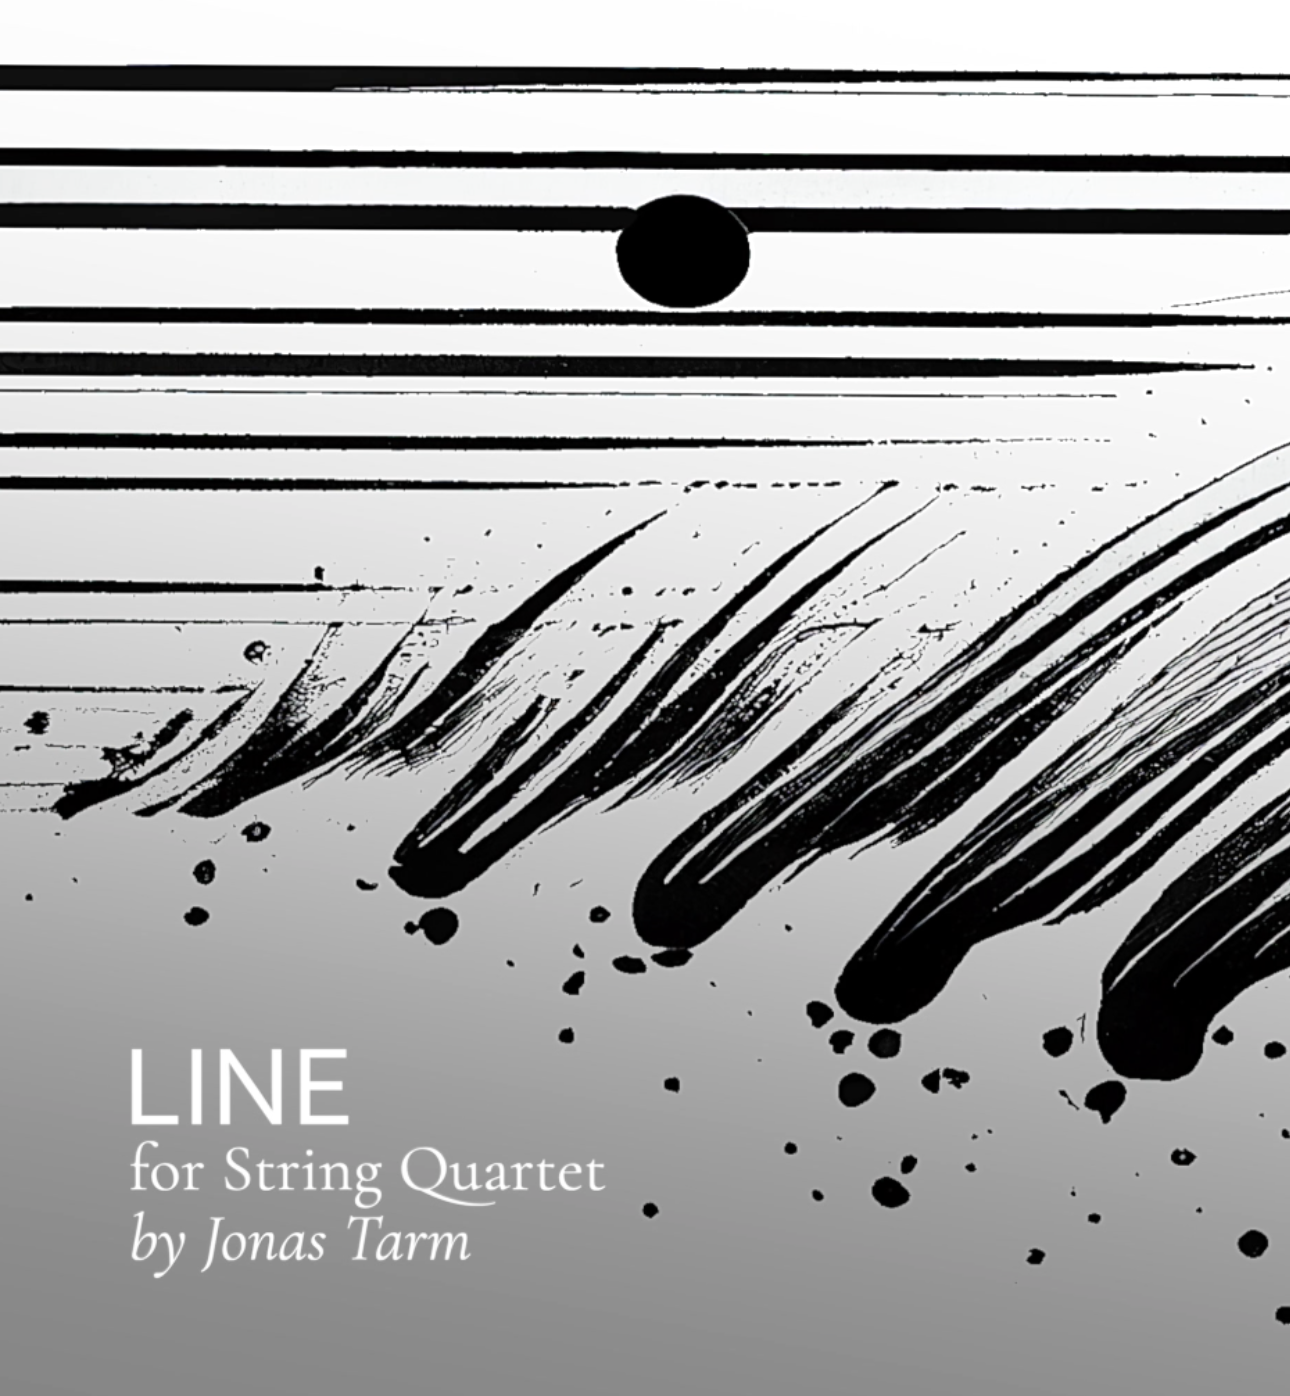 Line for String Quartet